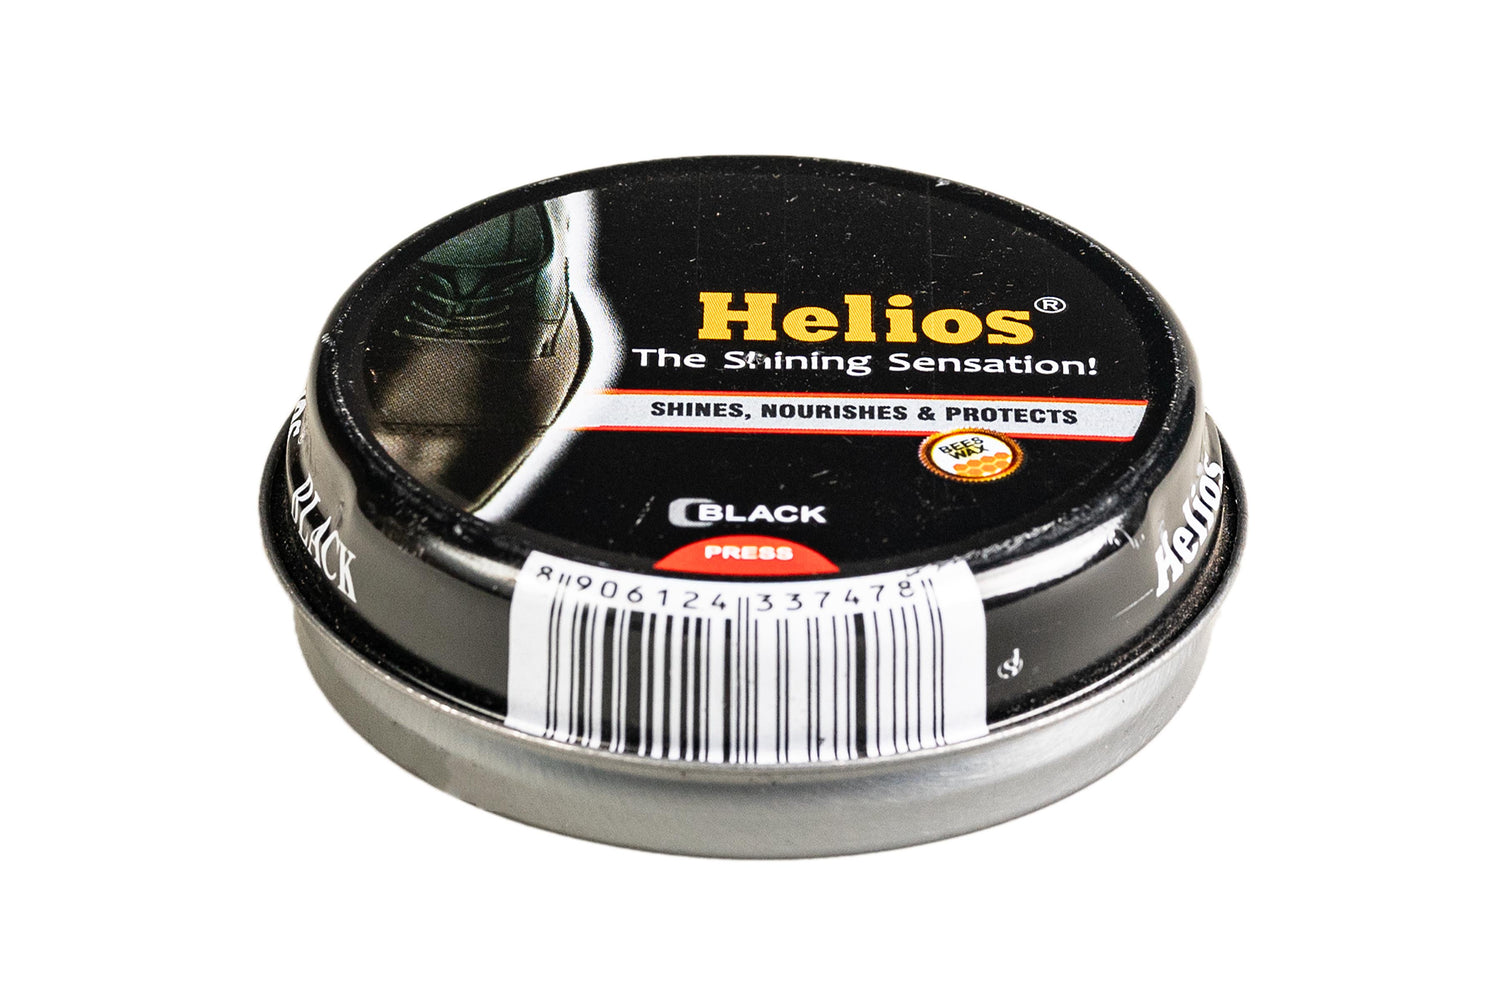 Helios Black Wax Shoe Polish